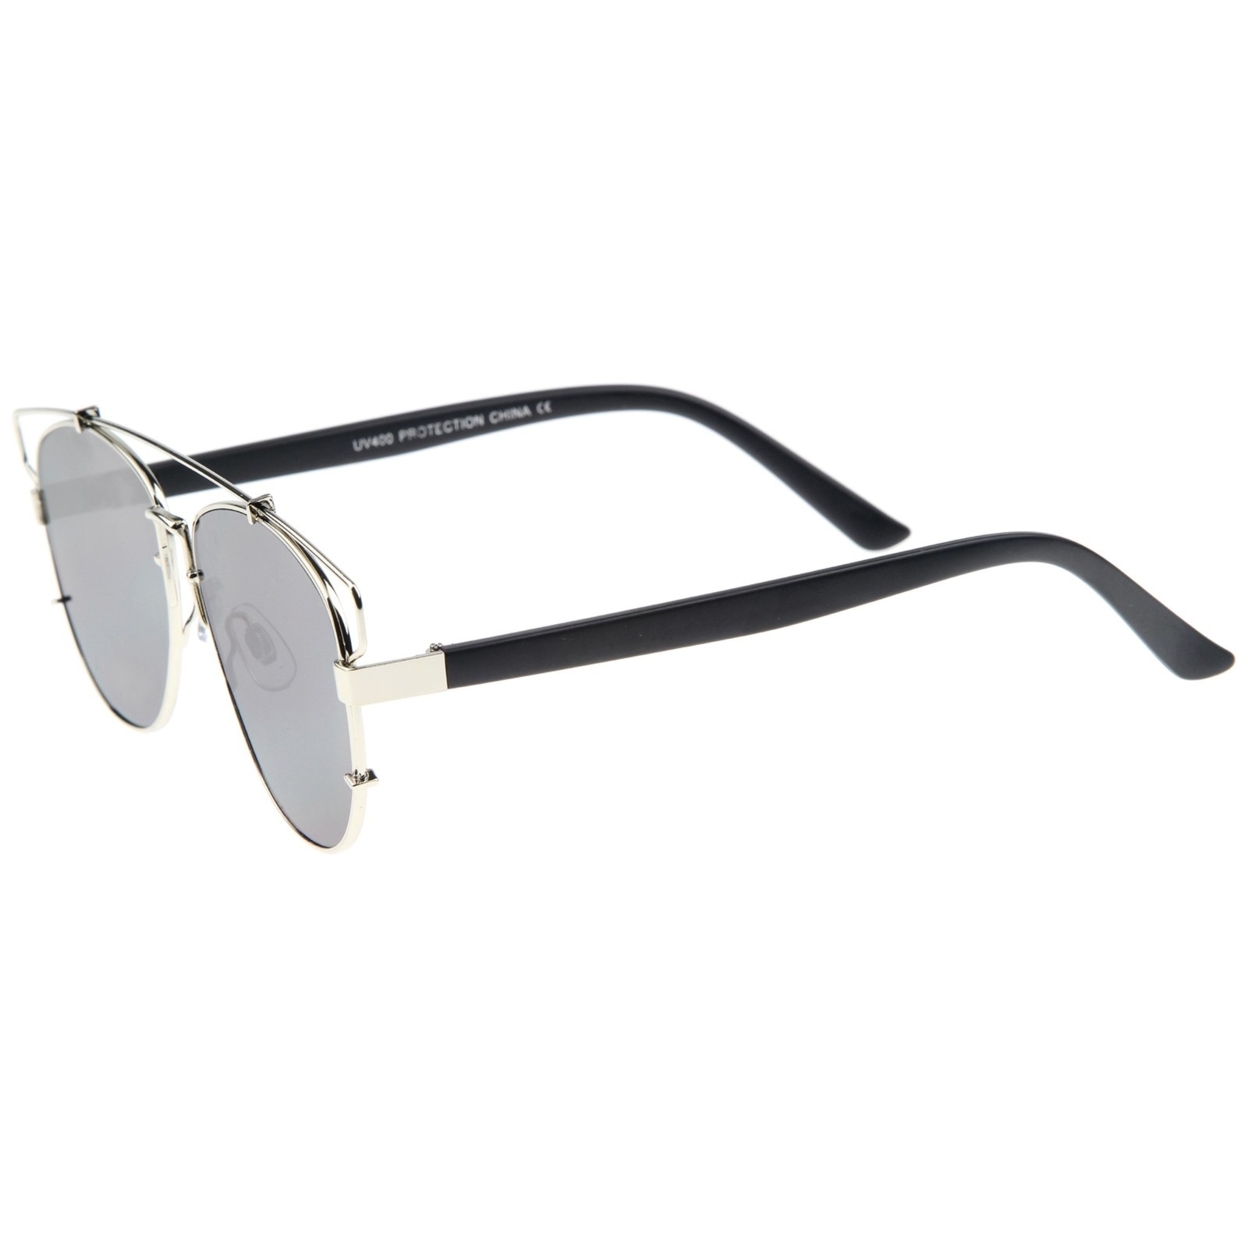 Modern Fashion Full Metal Crossbar Technologic Flat Lens Aviator Sunglasses 54mm - Black-Black / Green Sunglasses